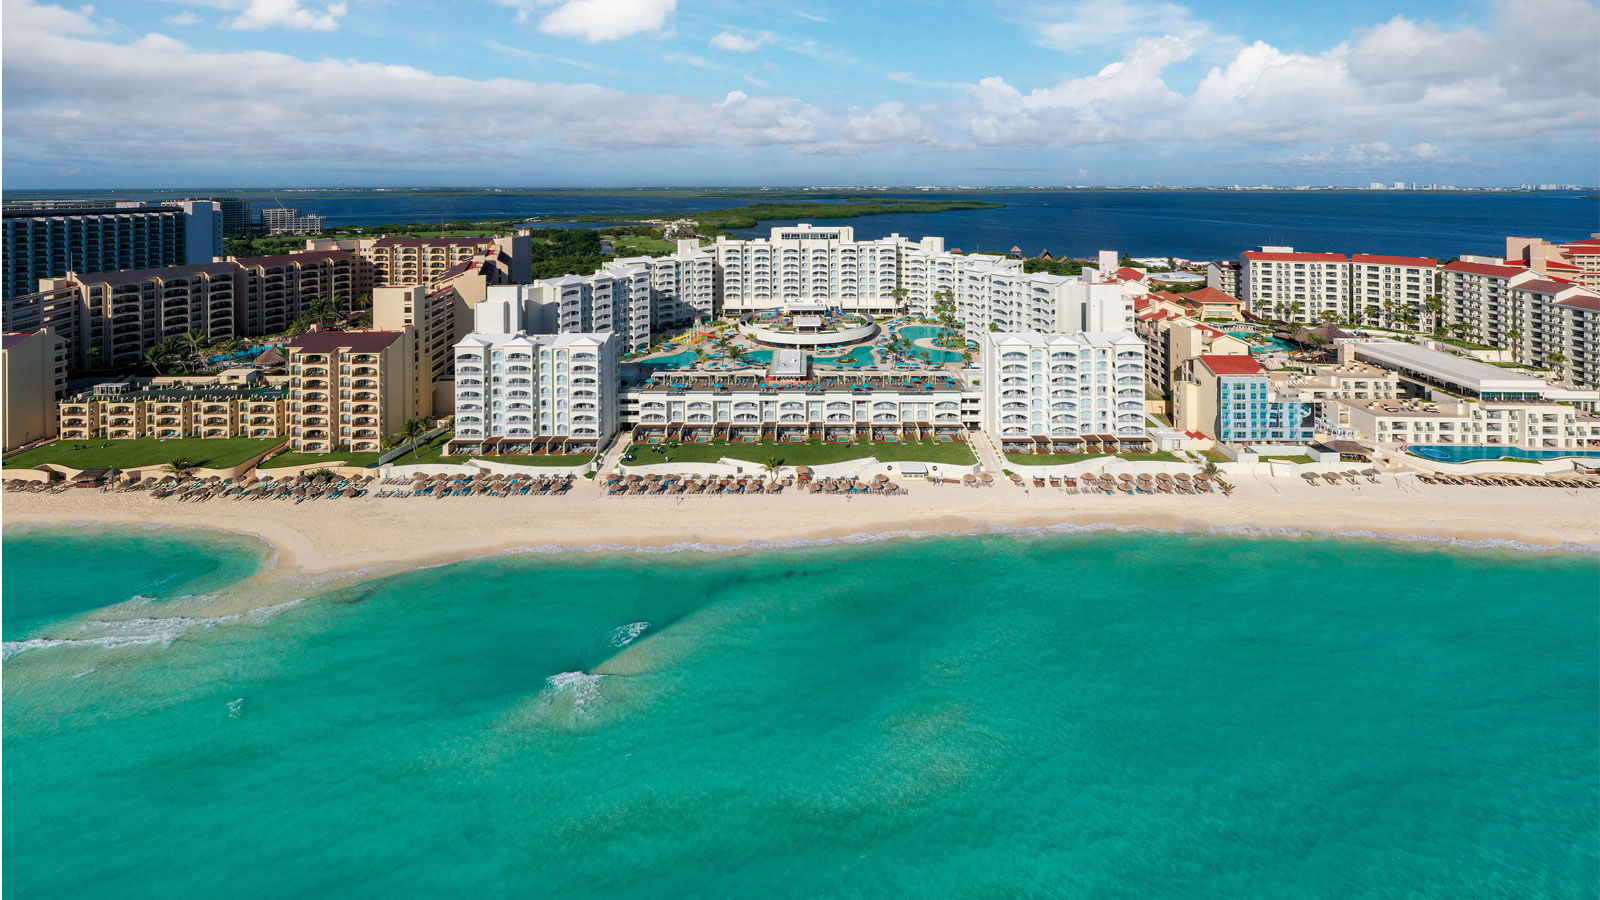 Hilton Cancun Mar Caribe All-Inclusive Resort - Aerial